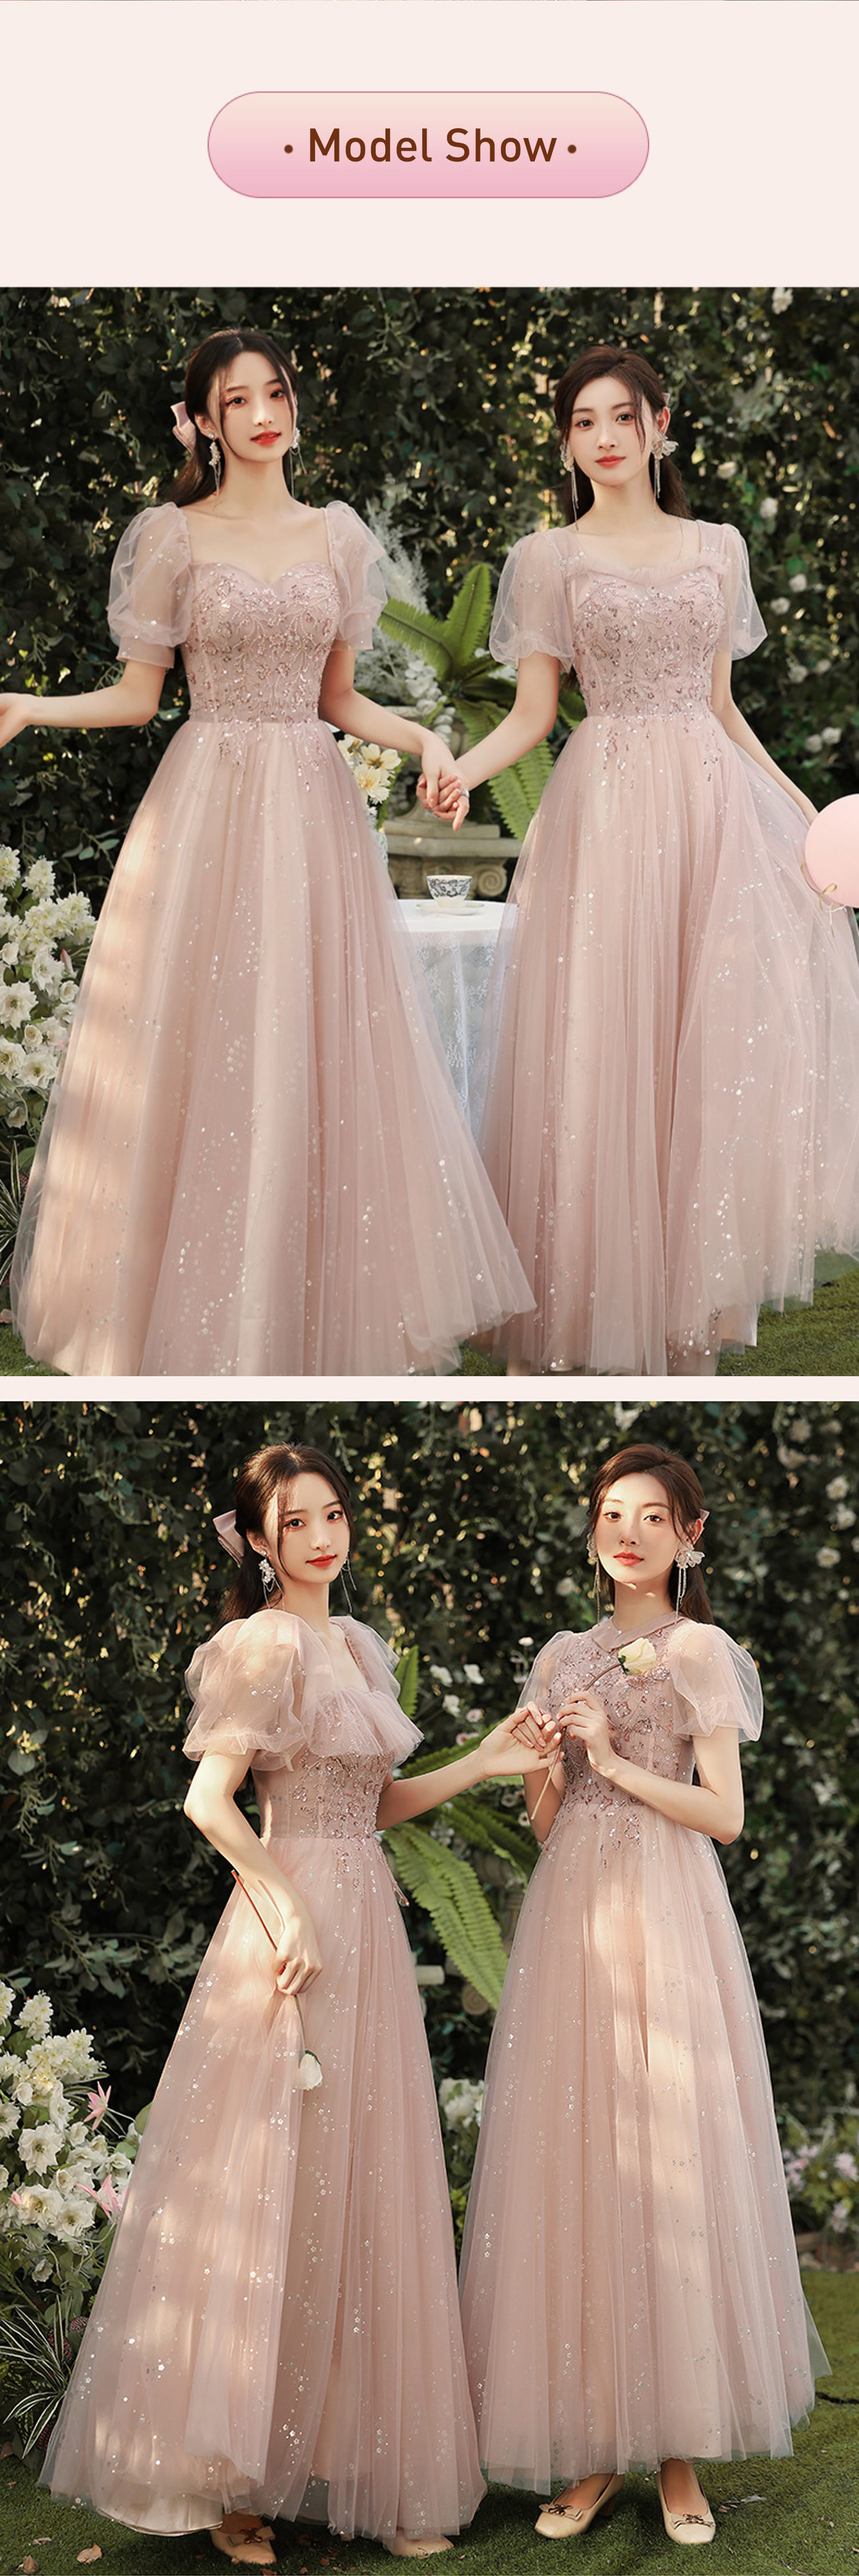 Aesthetic-Pink-Bridal-Wedding-Party-Bridesmaid-Long-Maxi-Dress16.jpg